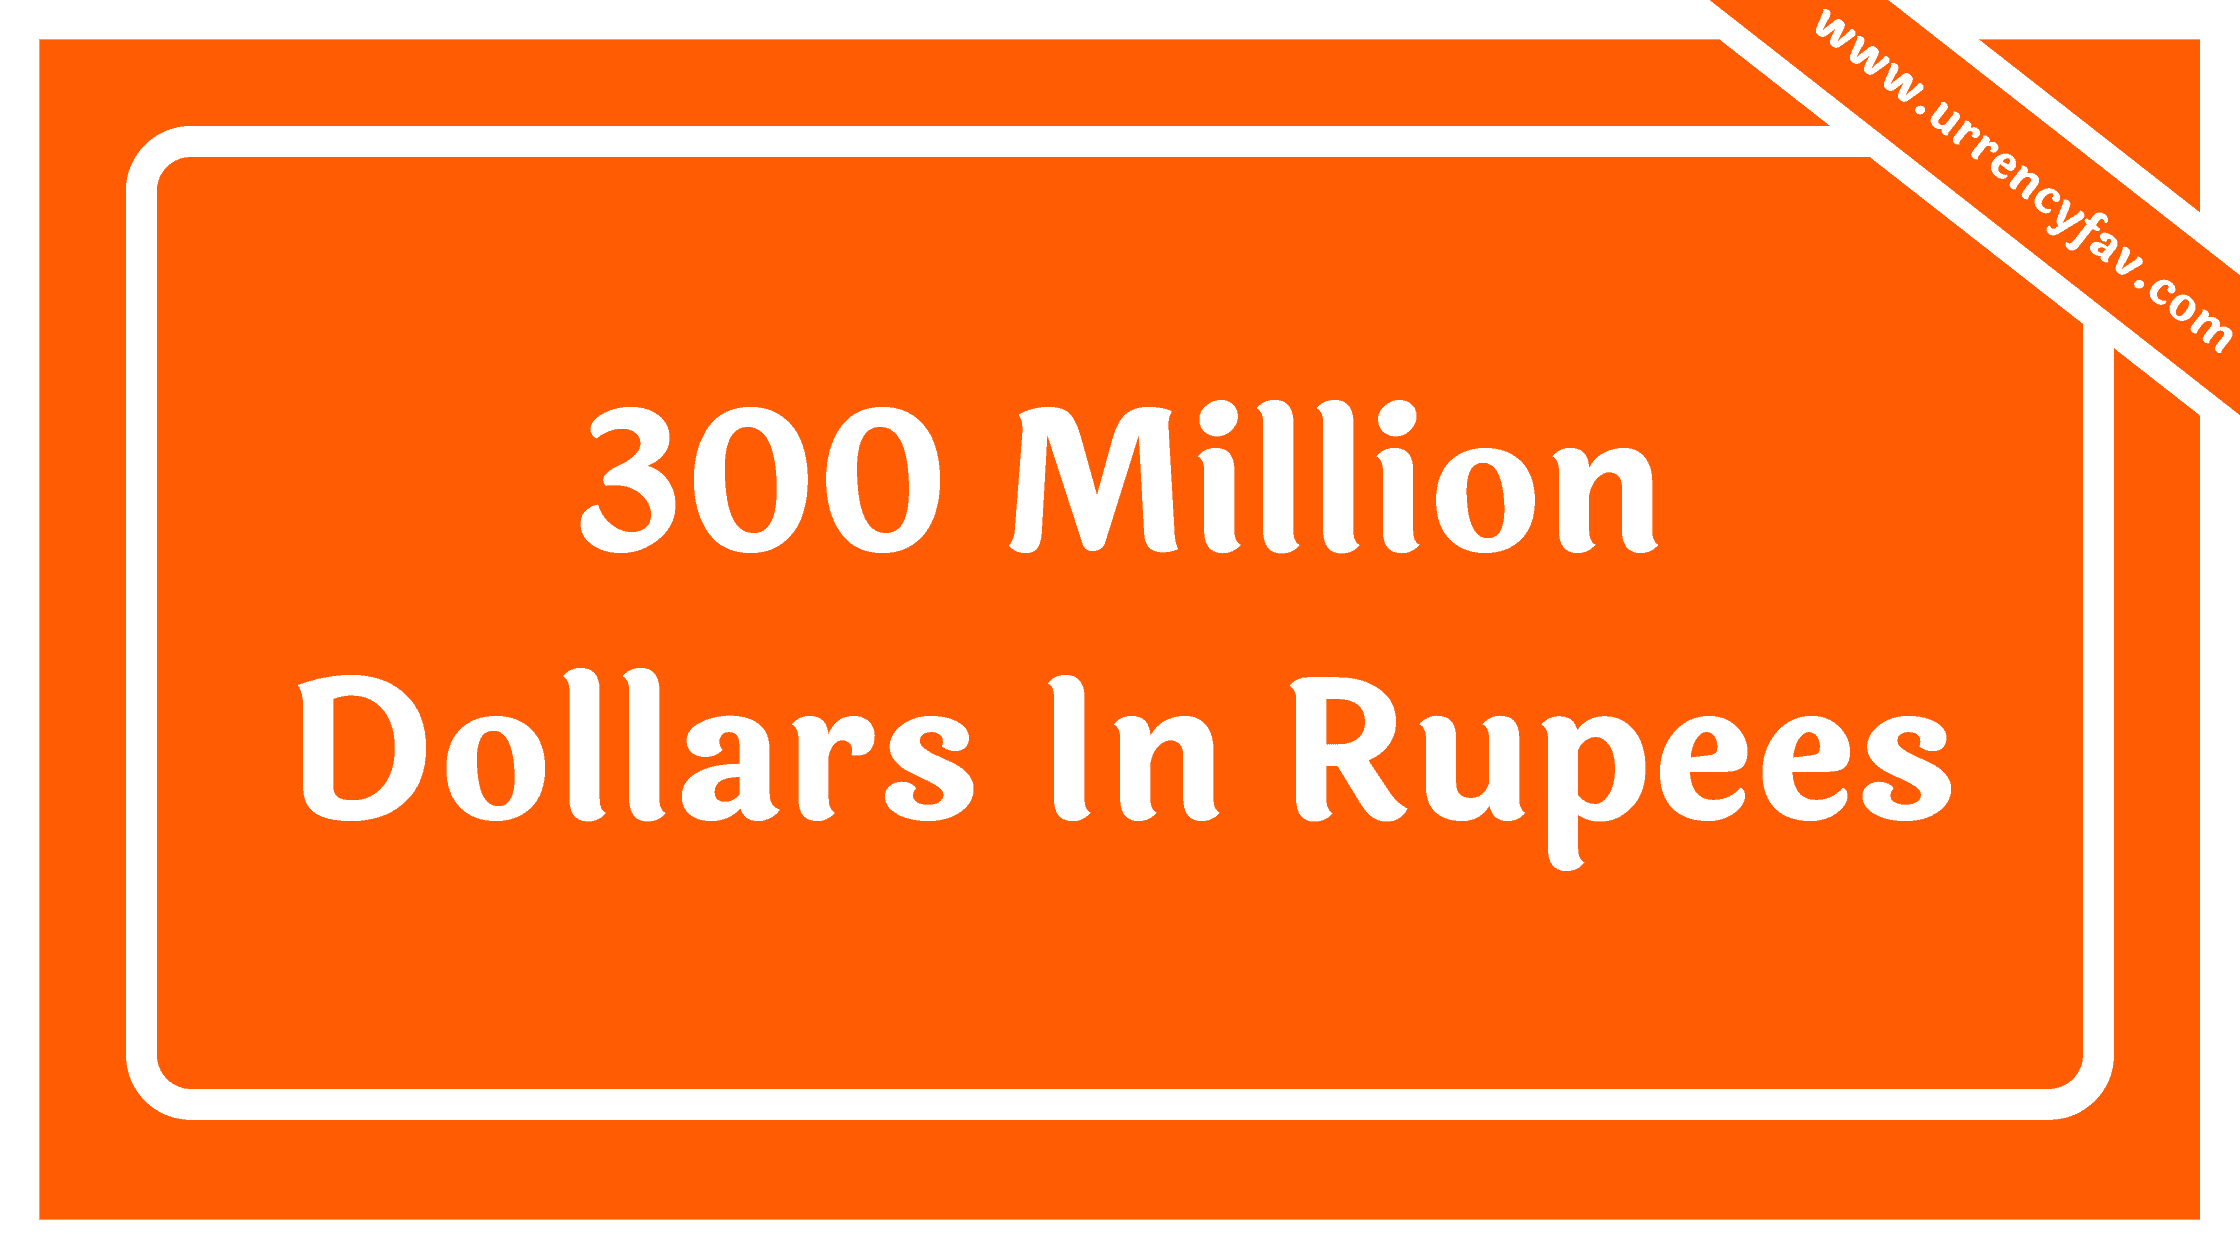 300 Million Dollars In Rupees